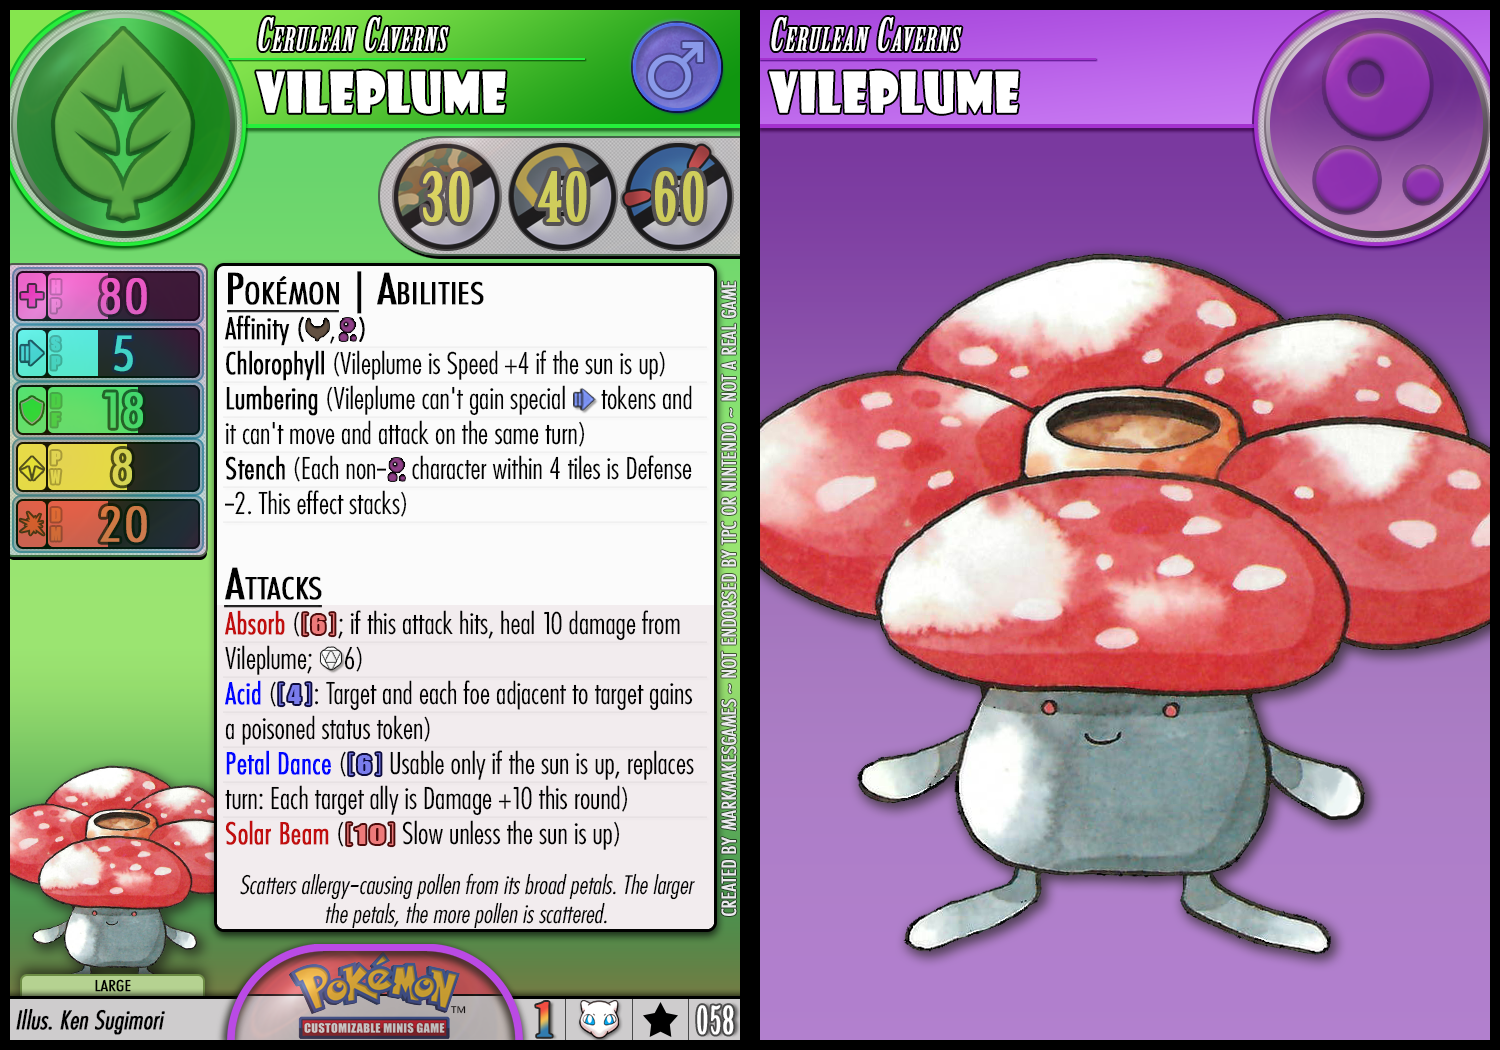 0045 Vileplume (cartas pokemon - pokedex) by estebangamer2001 on DeviantArt